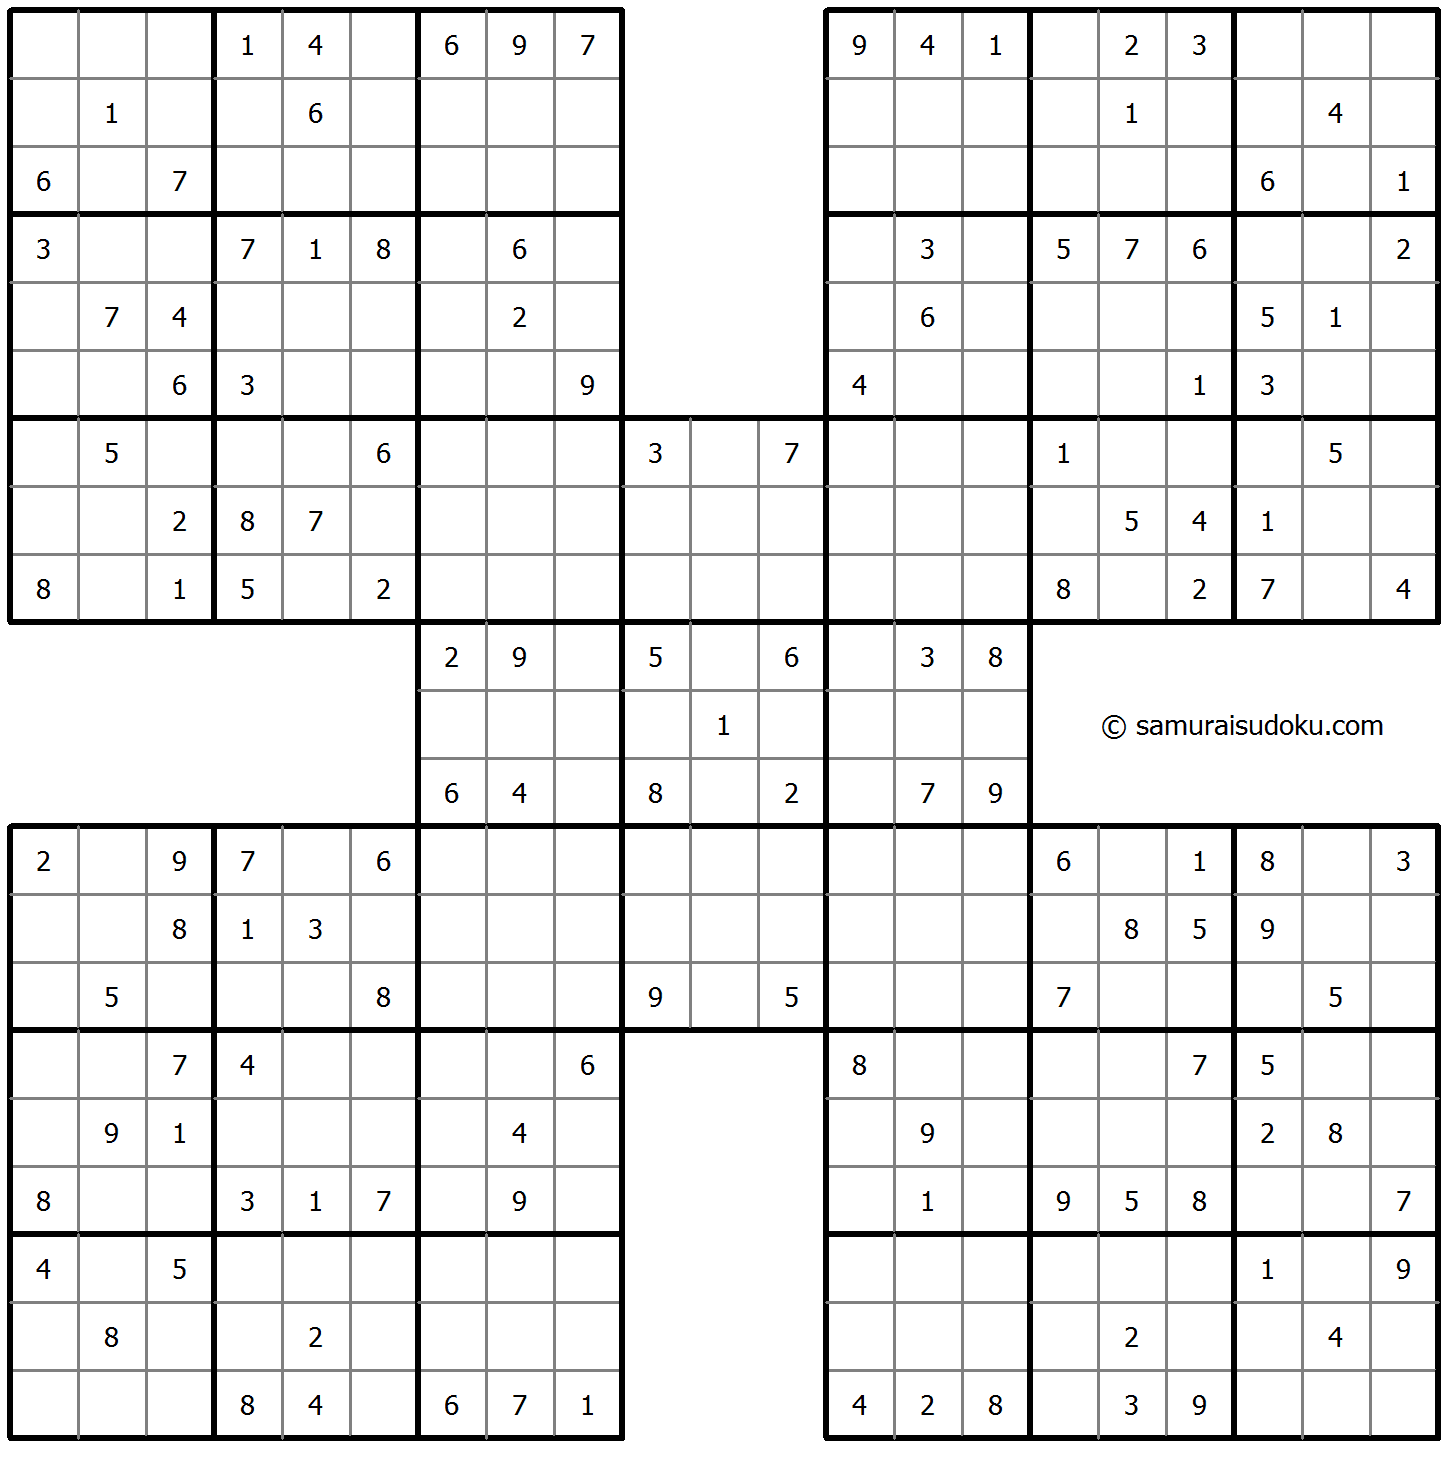 Samurai Sudoku 13-March-2022